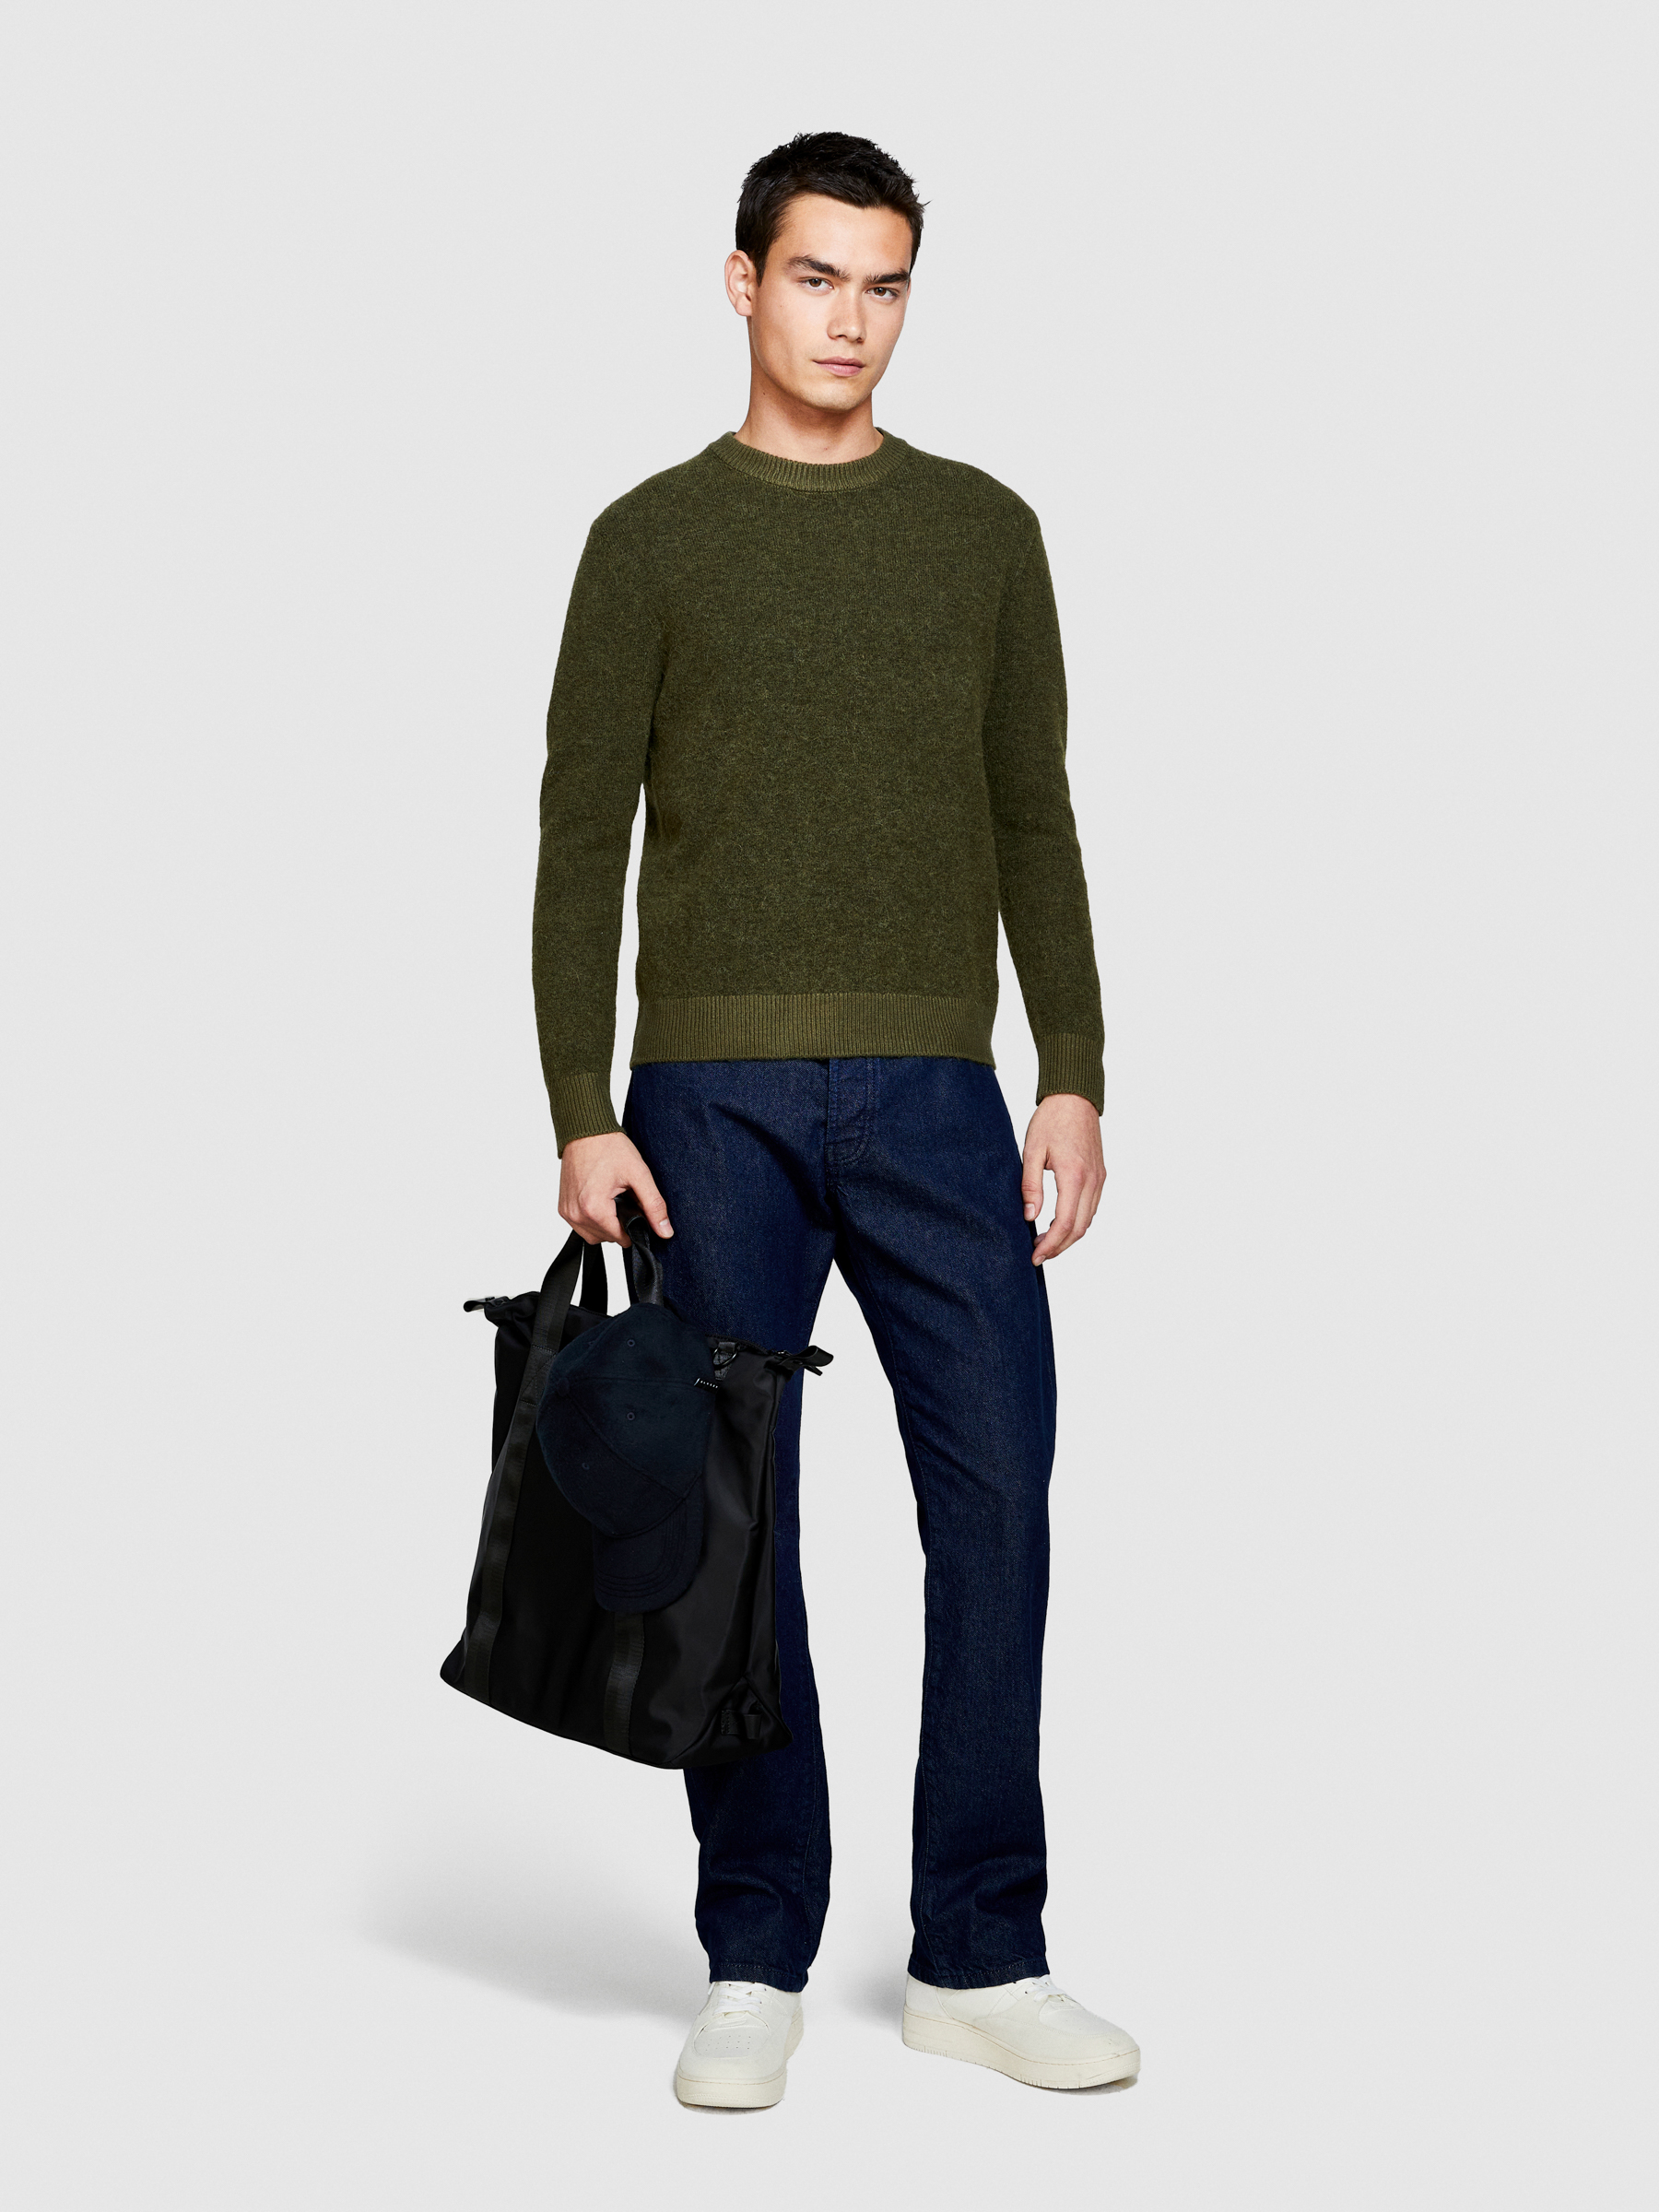 Sisley - Crew Neck Sweater, Man, Military Green, Size: XL